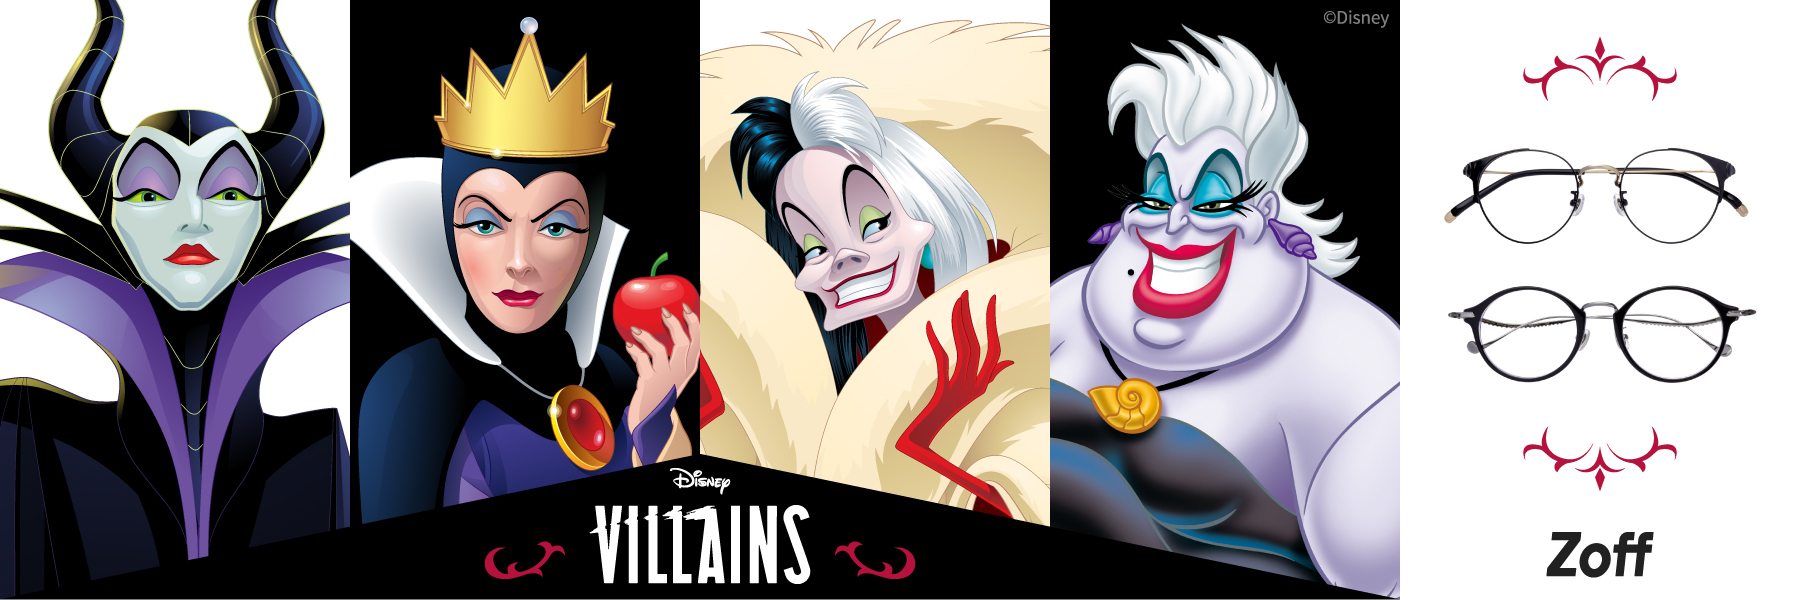 Disney Collection created by Zoff “Villains” （ディズニー コレクション クリエイテッド バイ ゾフ 「ヴィランズ」